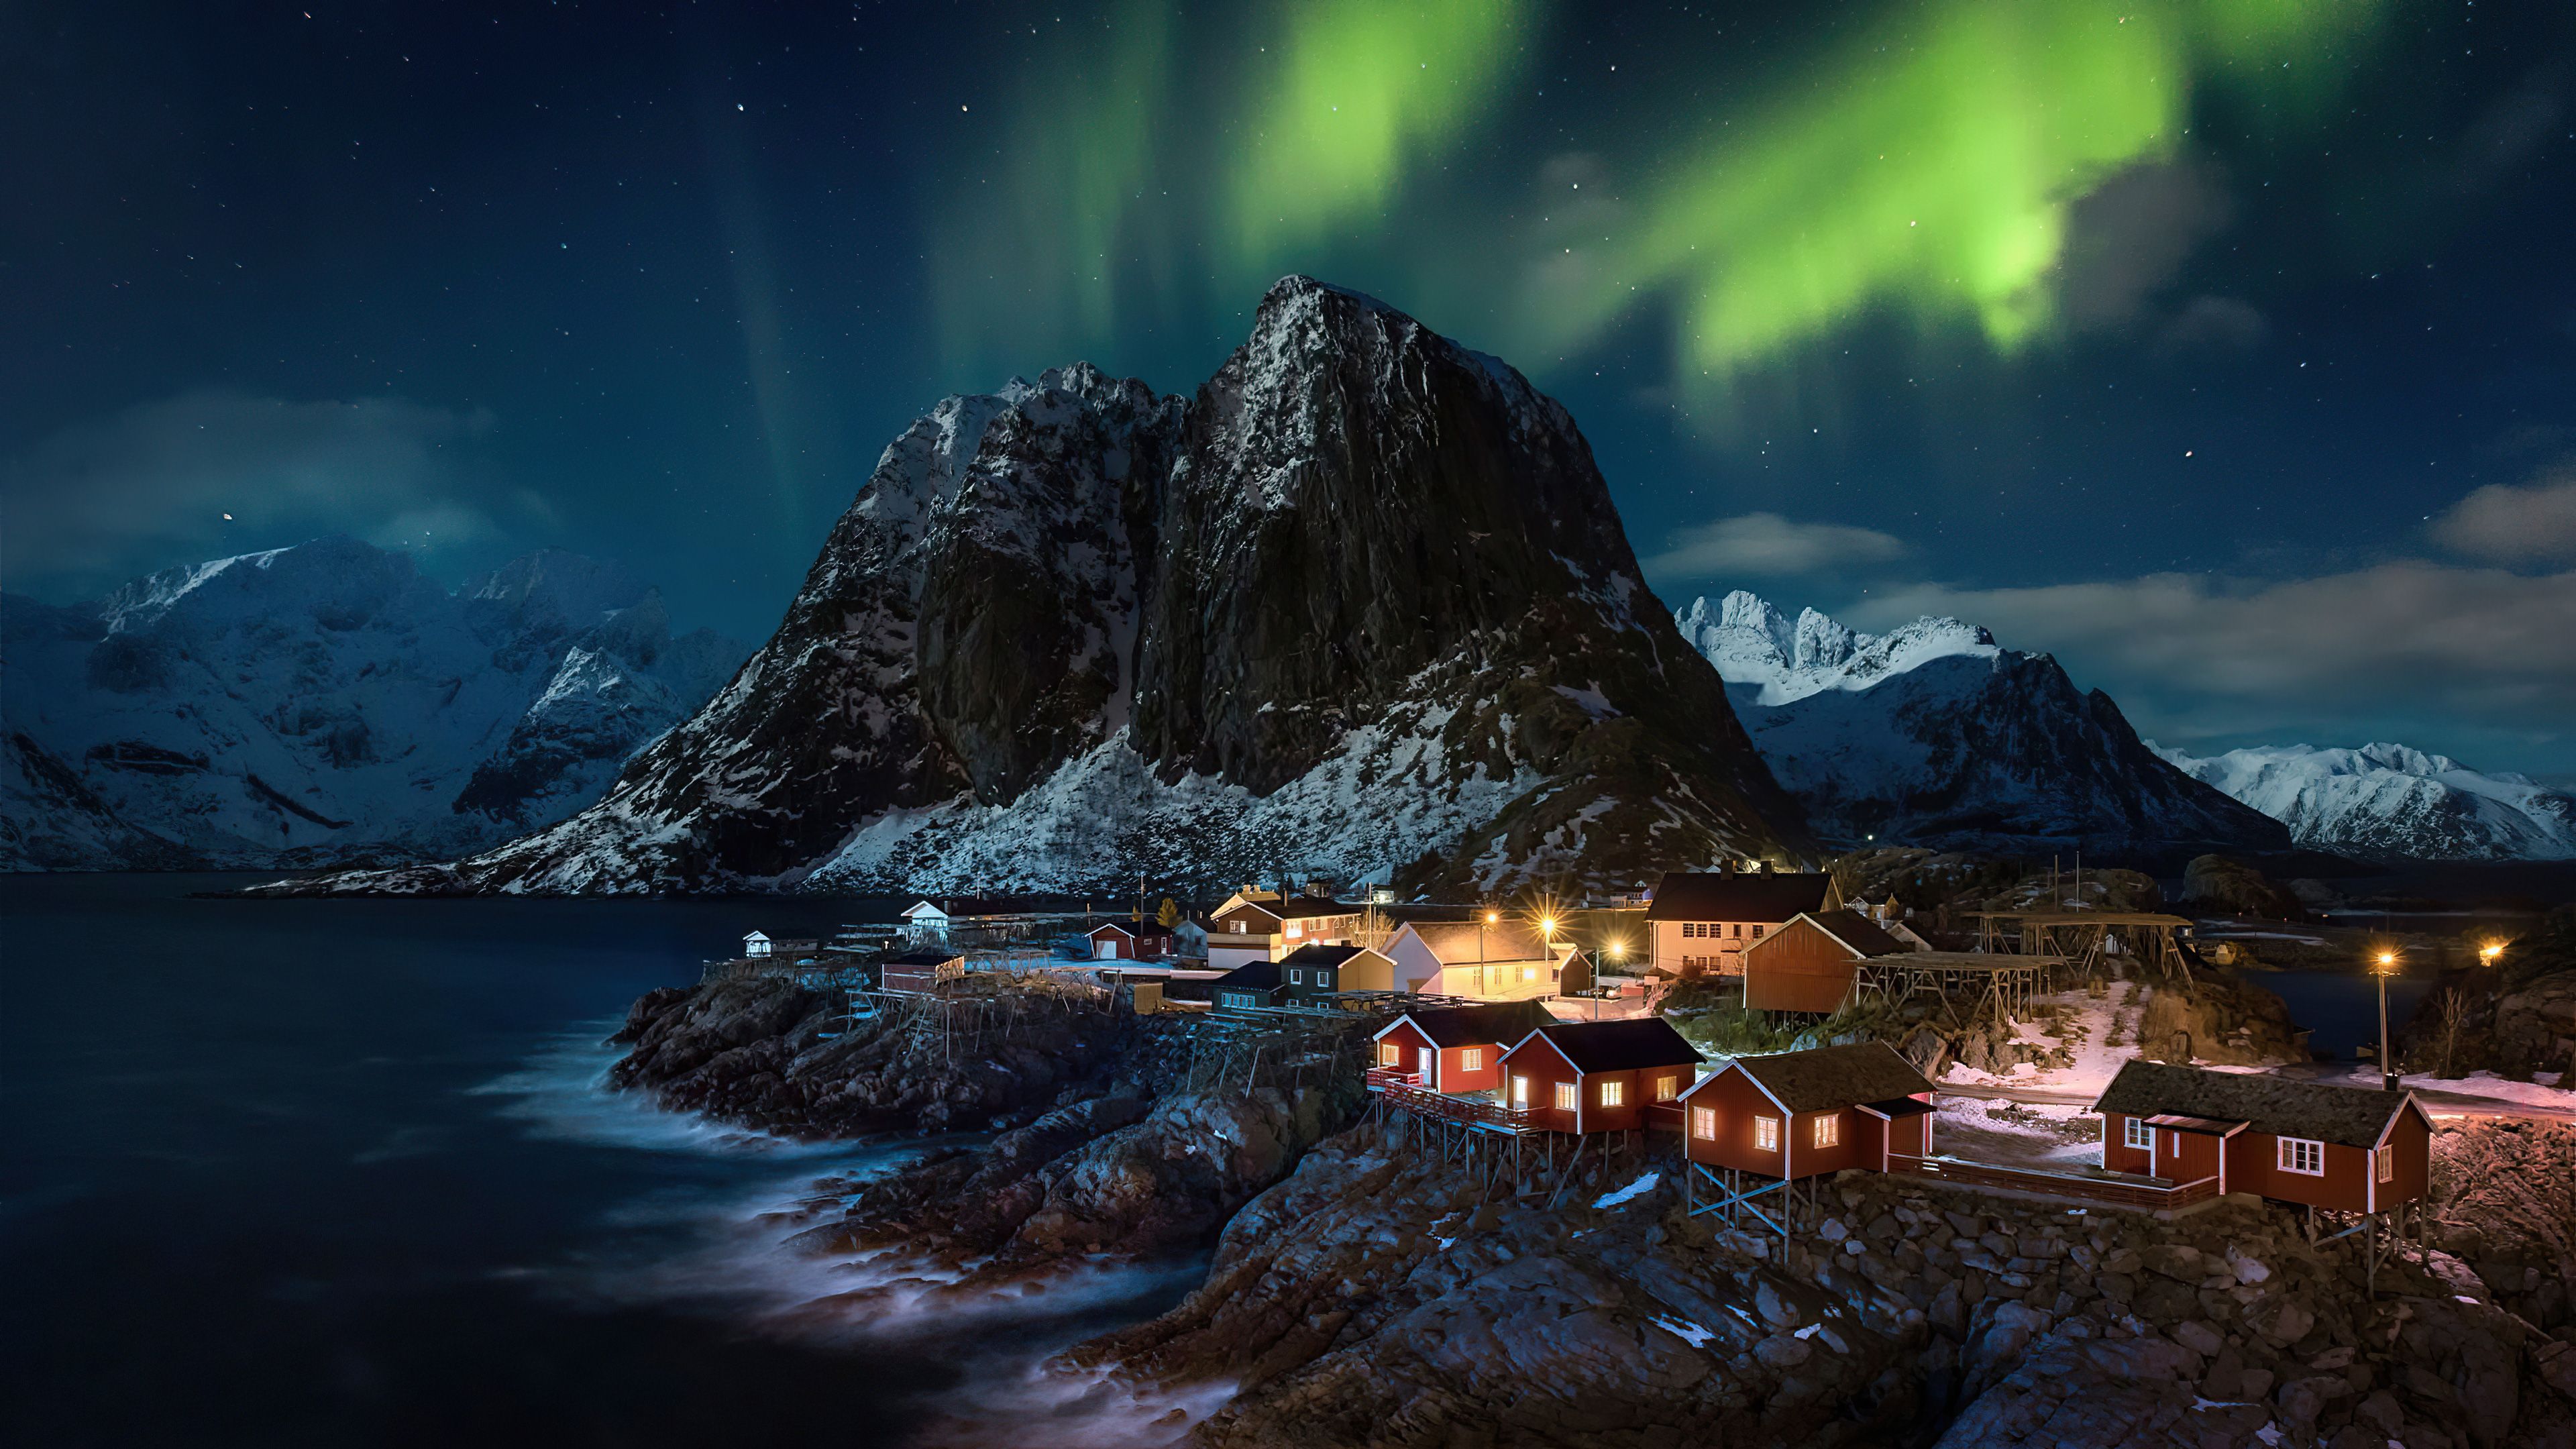 Lofoten Norway Village Aurora Northern Lights 4k, HD Nature, 4k Wallpaper, Image, Background, Photo and Picture